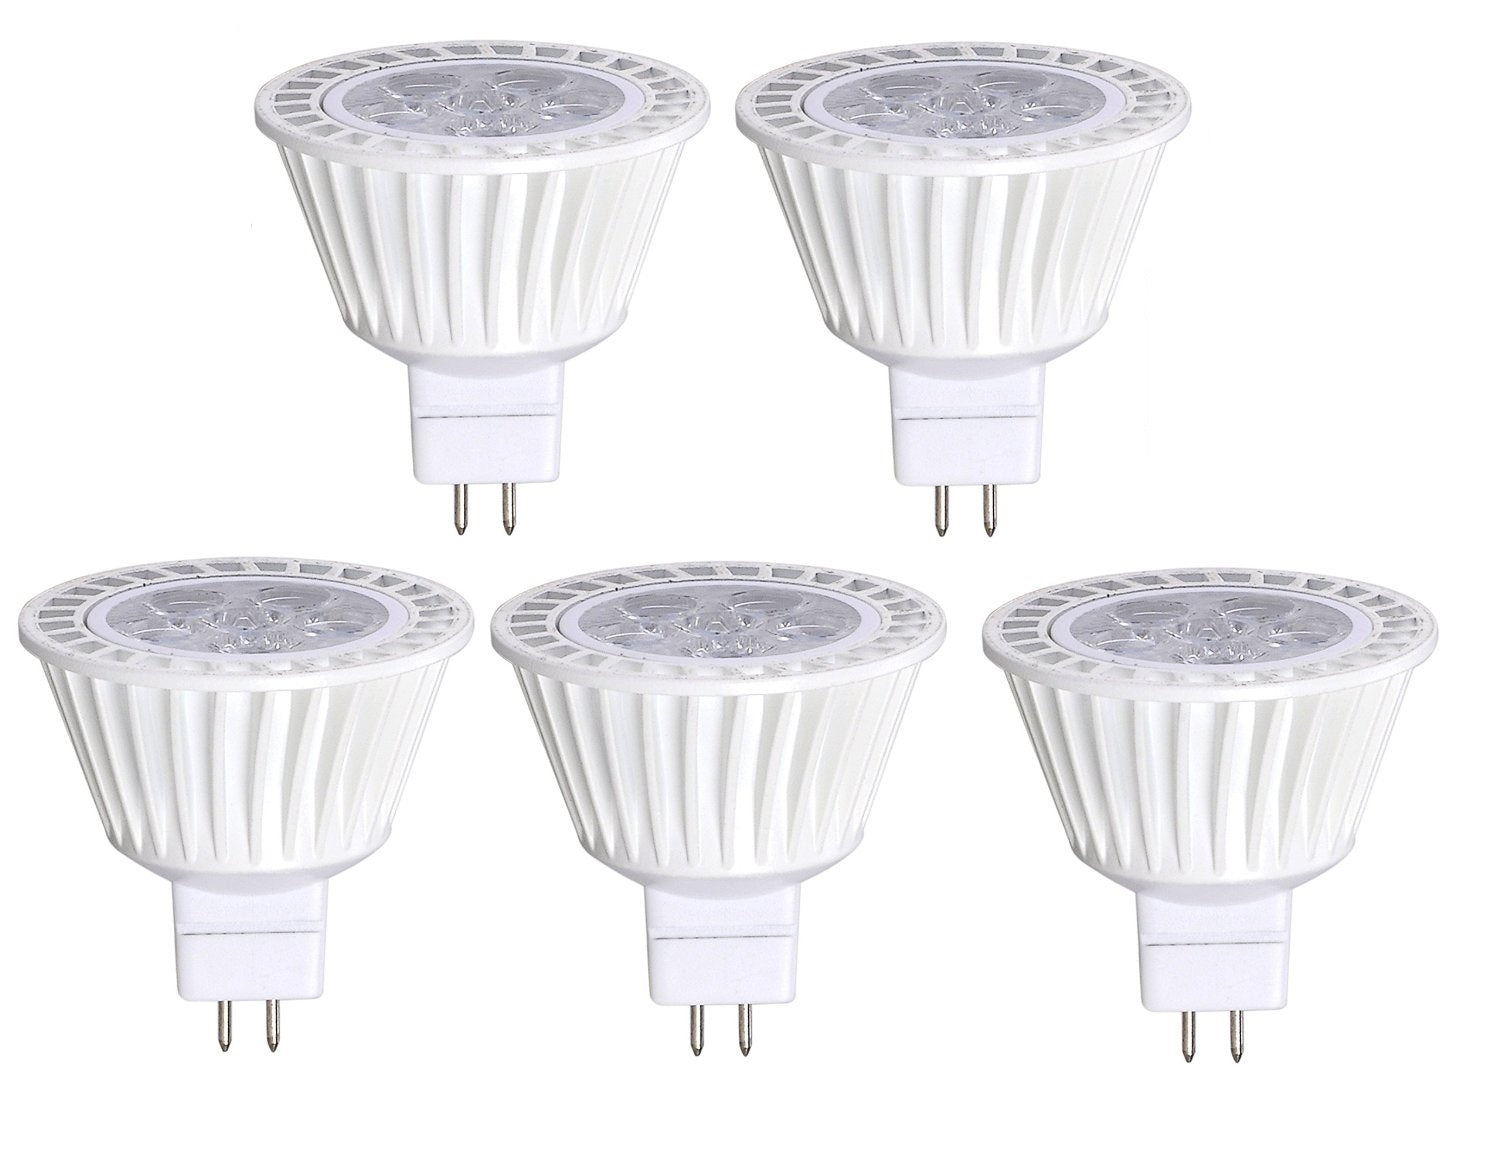 4,5W MR16 LED, 12V MR16 LED Lampe, 420LM 3000K Warmweiss, Milchig Schutzglas